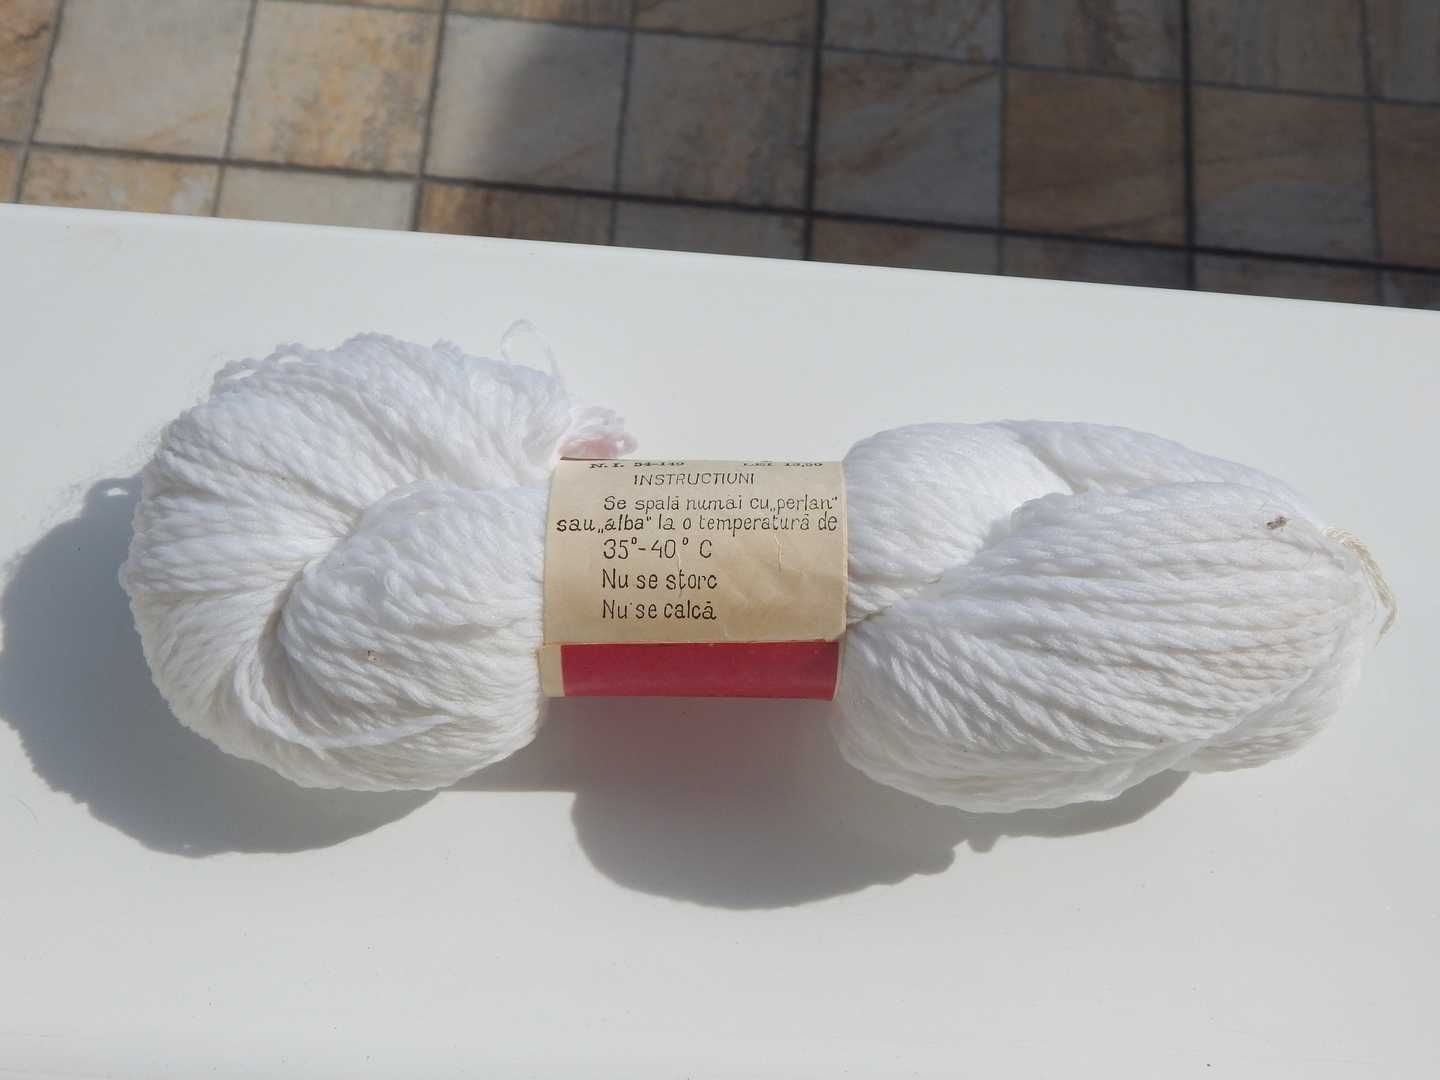 Fire tricotat lana alba 50 grame Neli fabricat Romania nefolosit